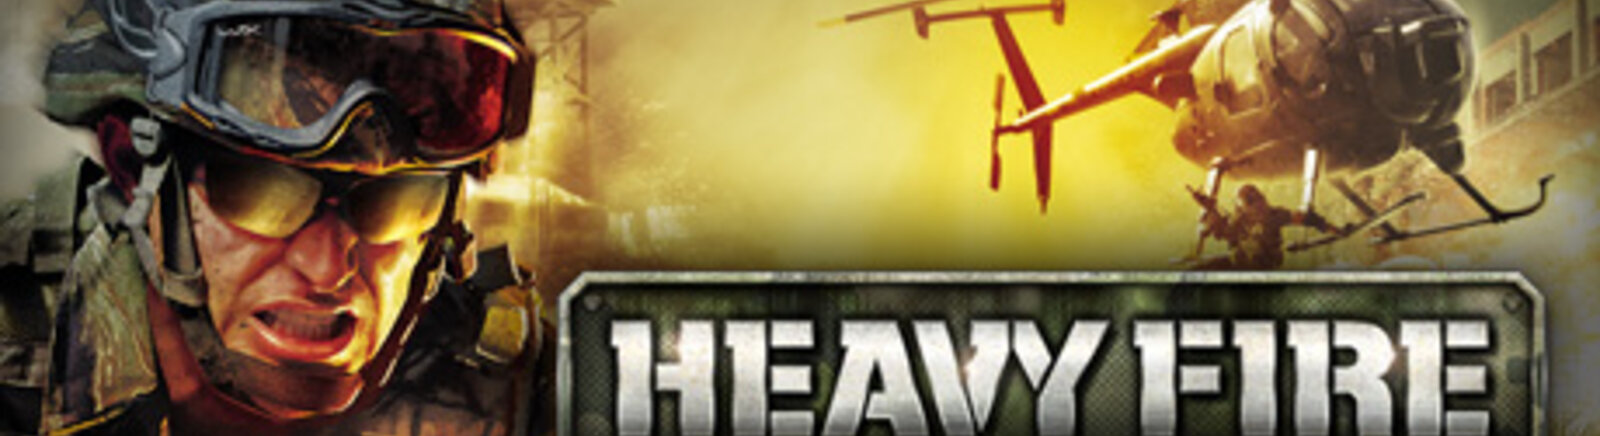 Дата выхода Heavy Fire: Shattered Spear  на PC, PS3 и Xbox 360 в России и во всем мире